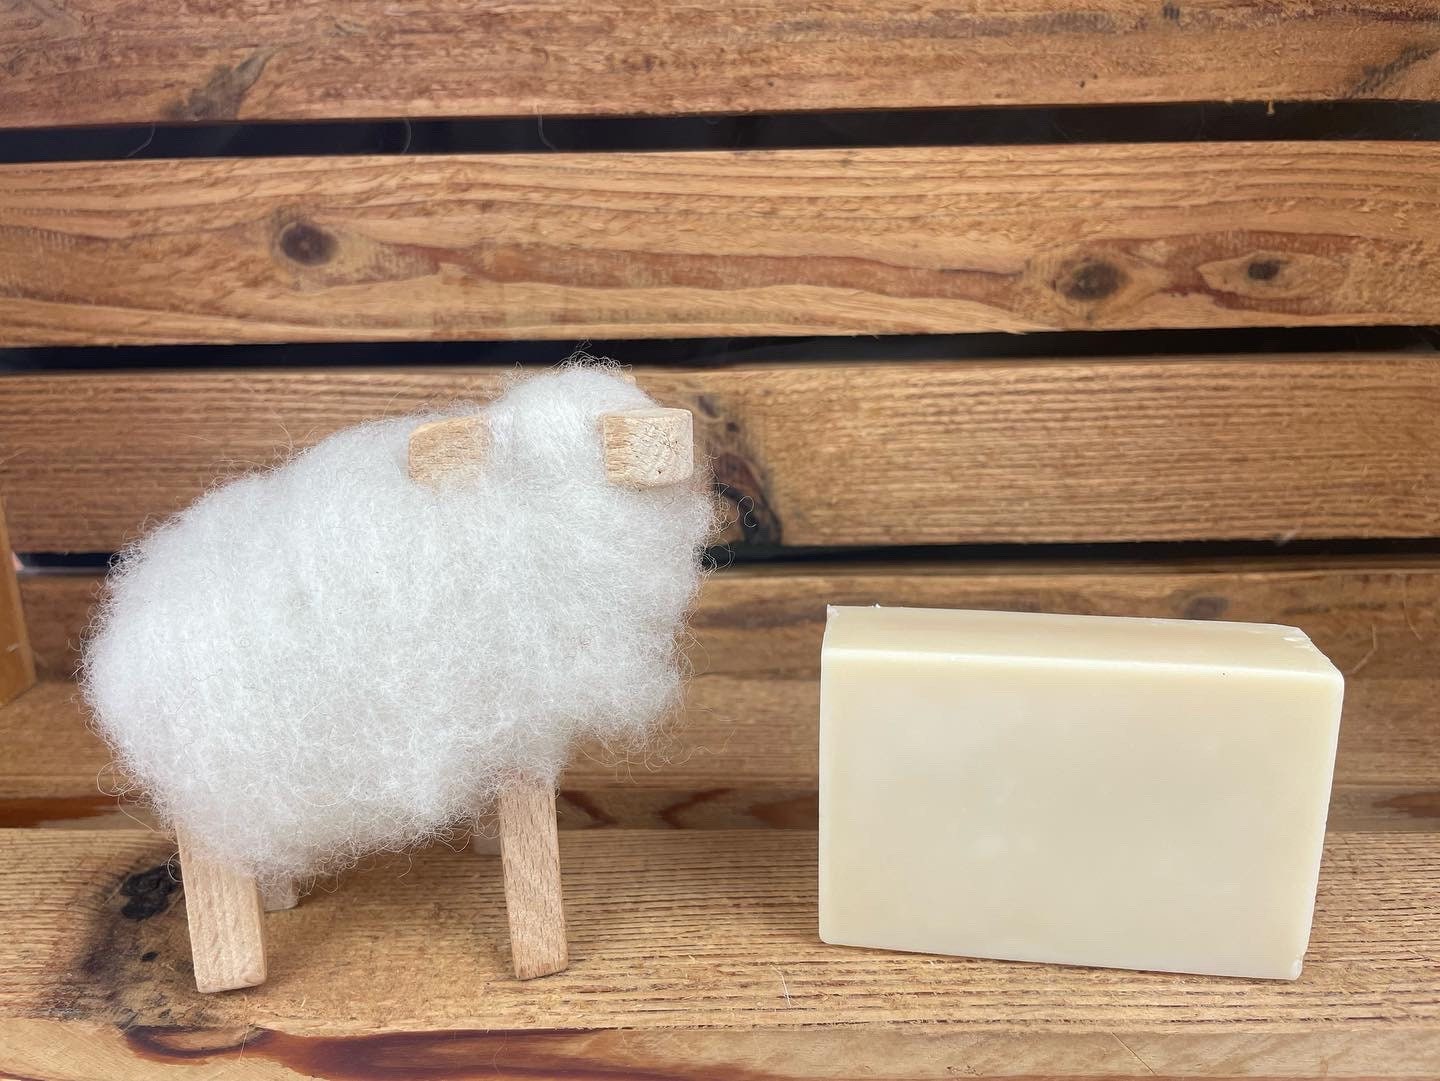 Grass Stain Icelandic Sheep Milk Bar Soap